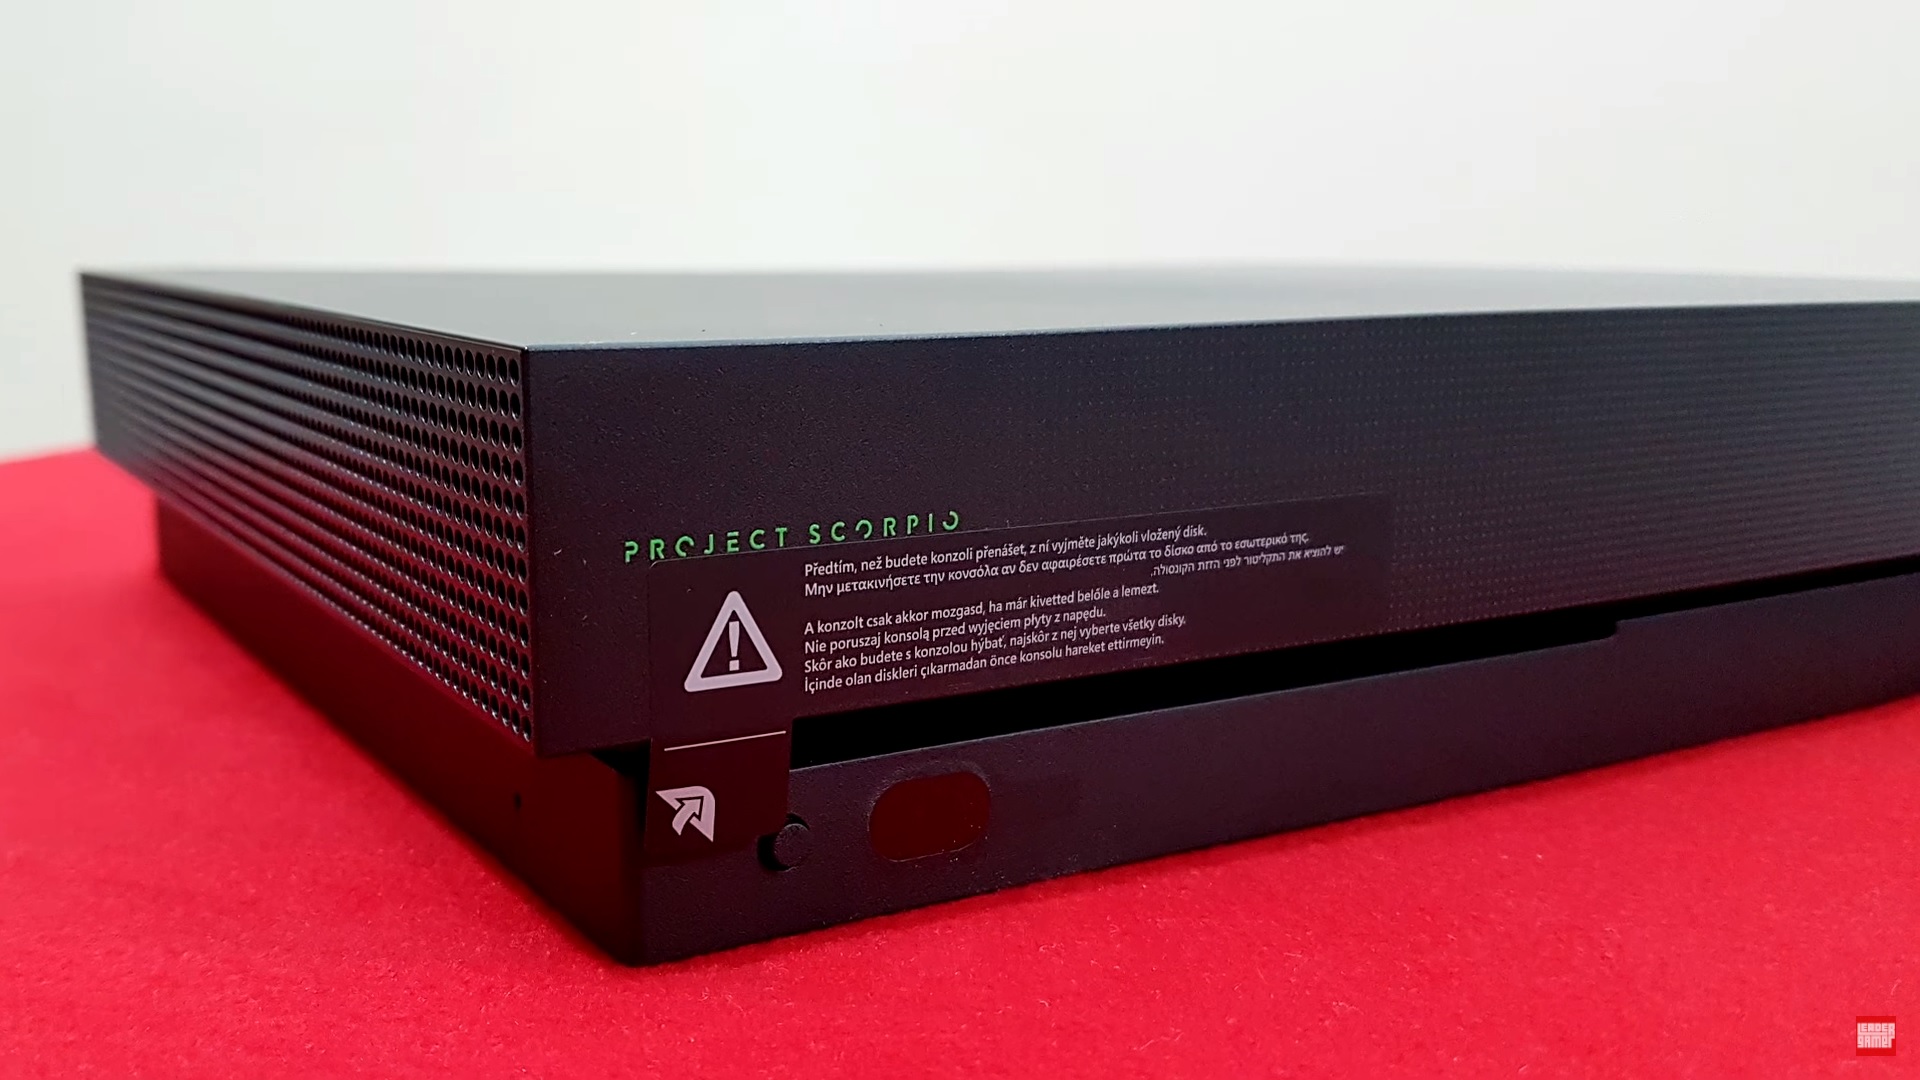 Xbox One X: Project Scorpio Edition kutu açılımı